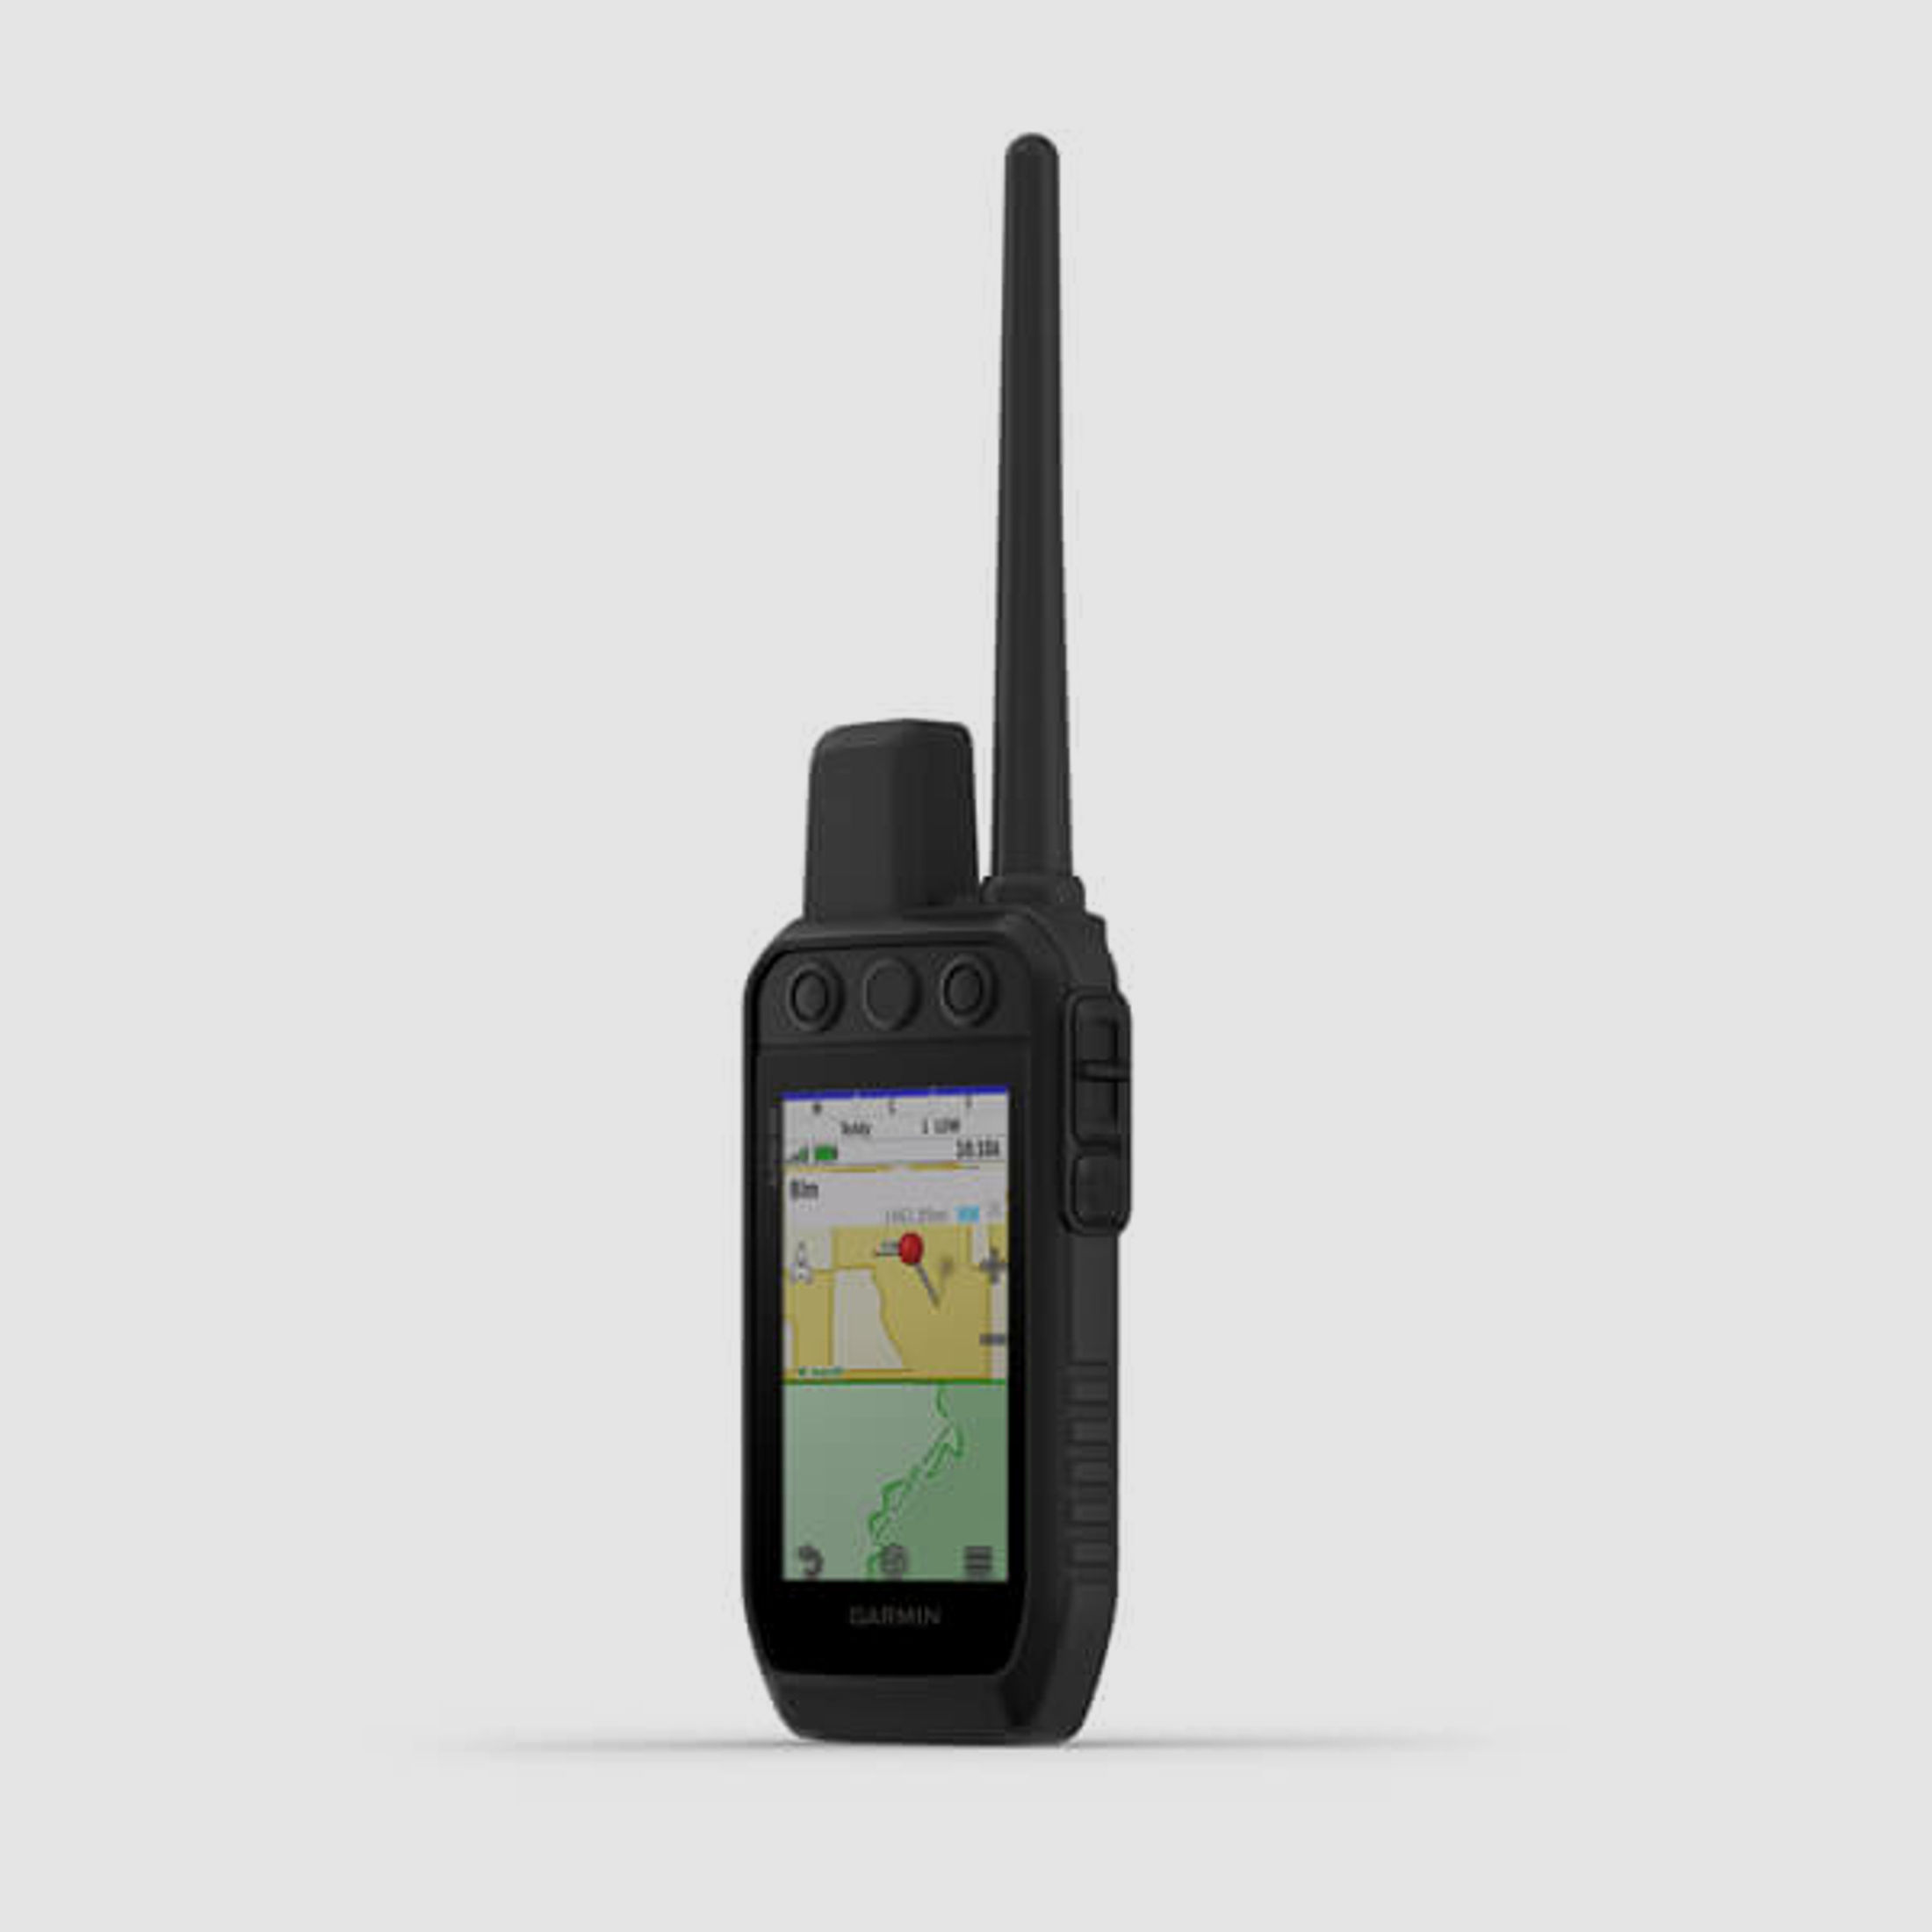 Garmin Alpha 200 K / K5X GPS - Hundeortung SET!